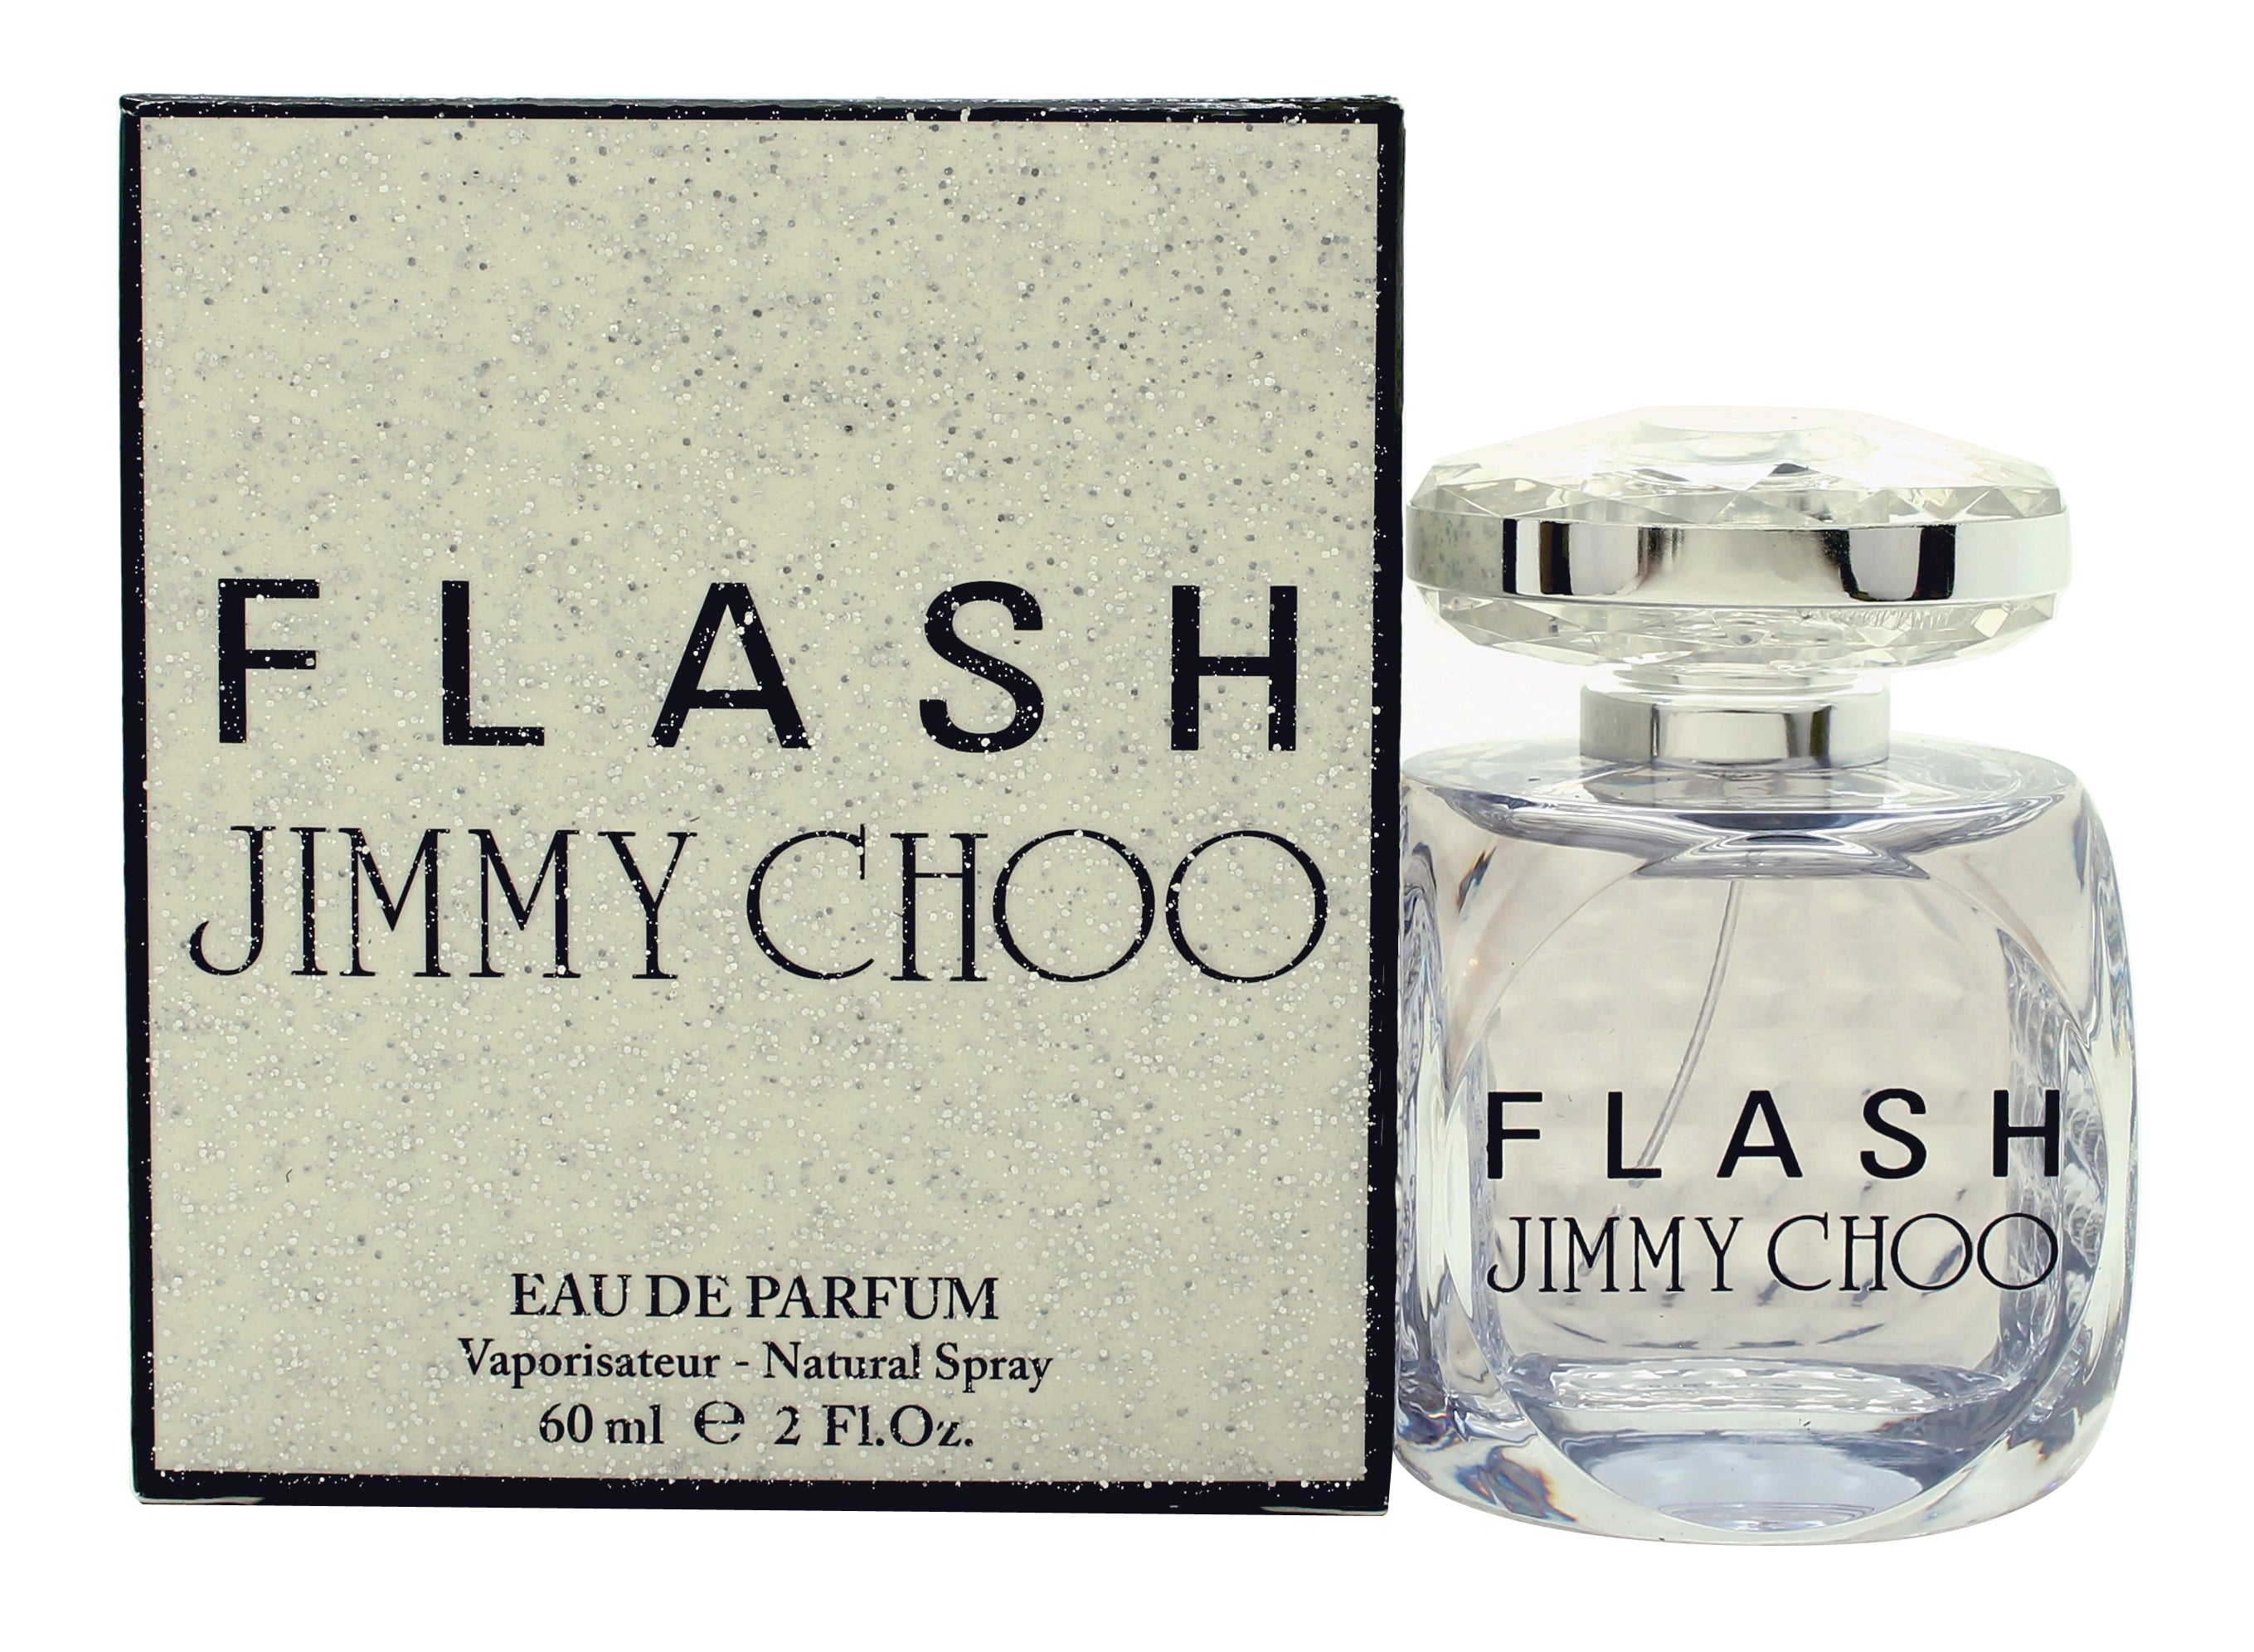 View Jimmy Choo Flash Eau de Parfum 60ml Sprej information